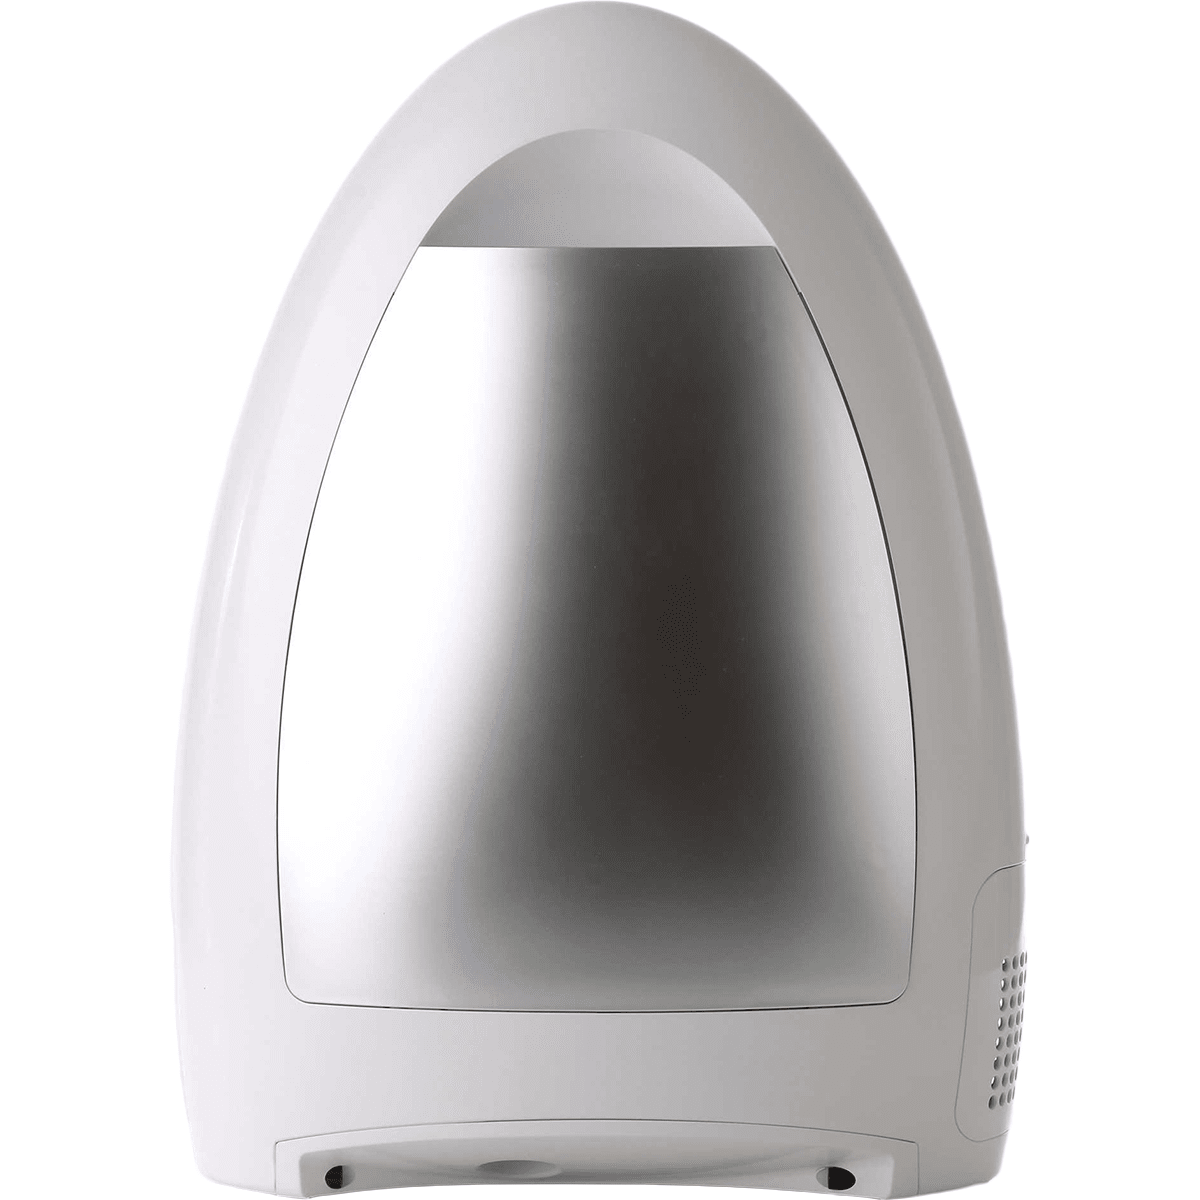 Eyevac Home Touchless Vacuum - Designer White (evh-w)